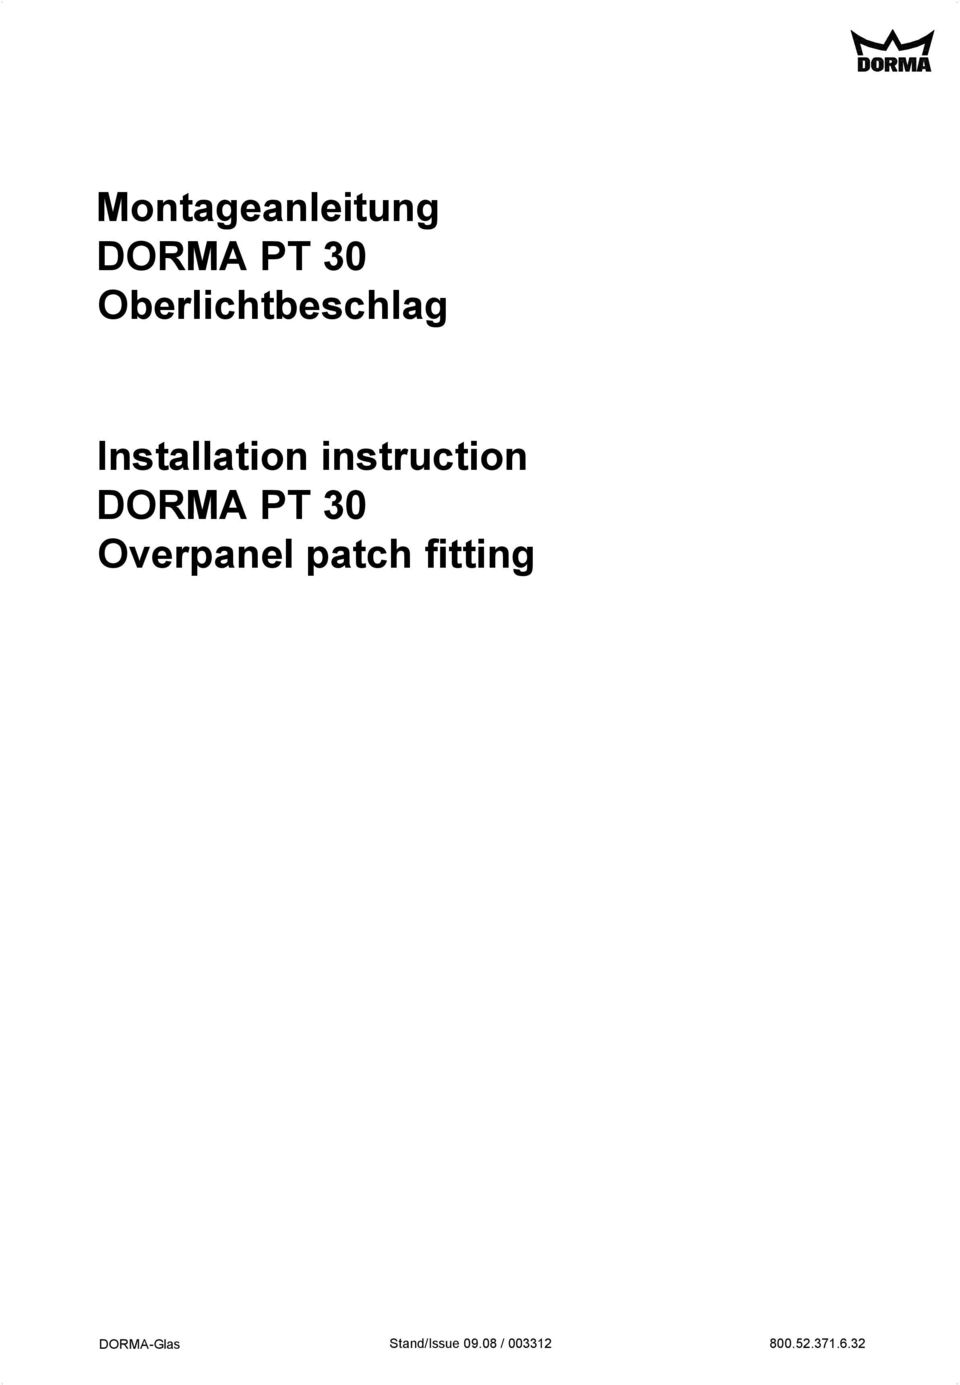 instruction DORMA PT 30 Overpanel